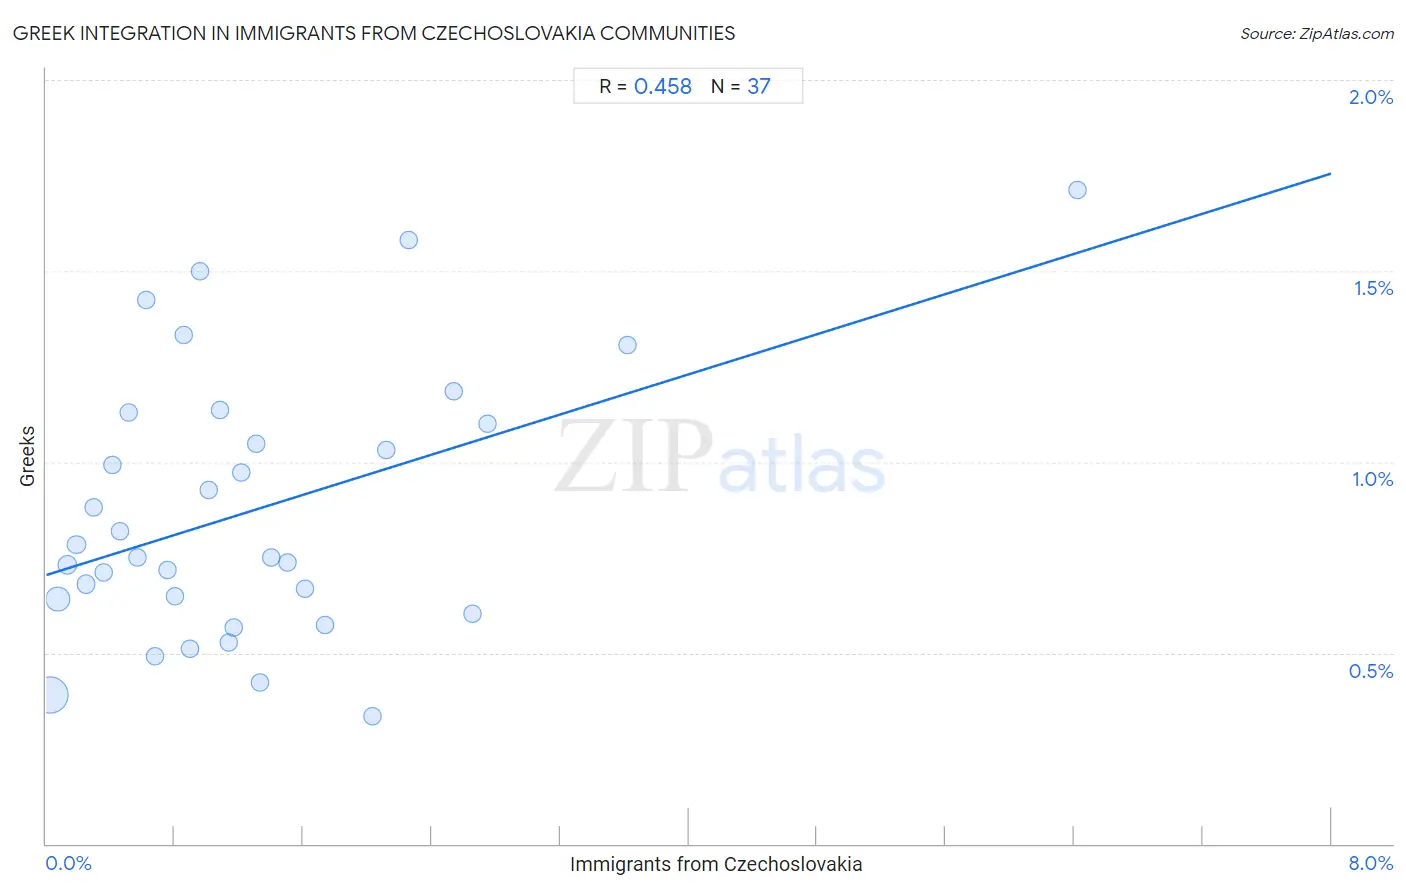 Immigrants from Czechoslovakia Integration in Greek Communities